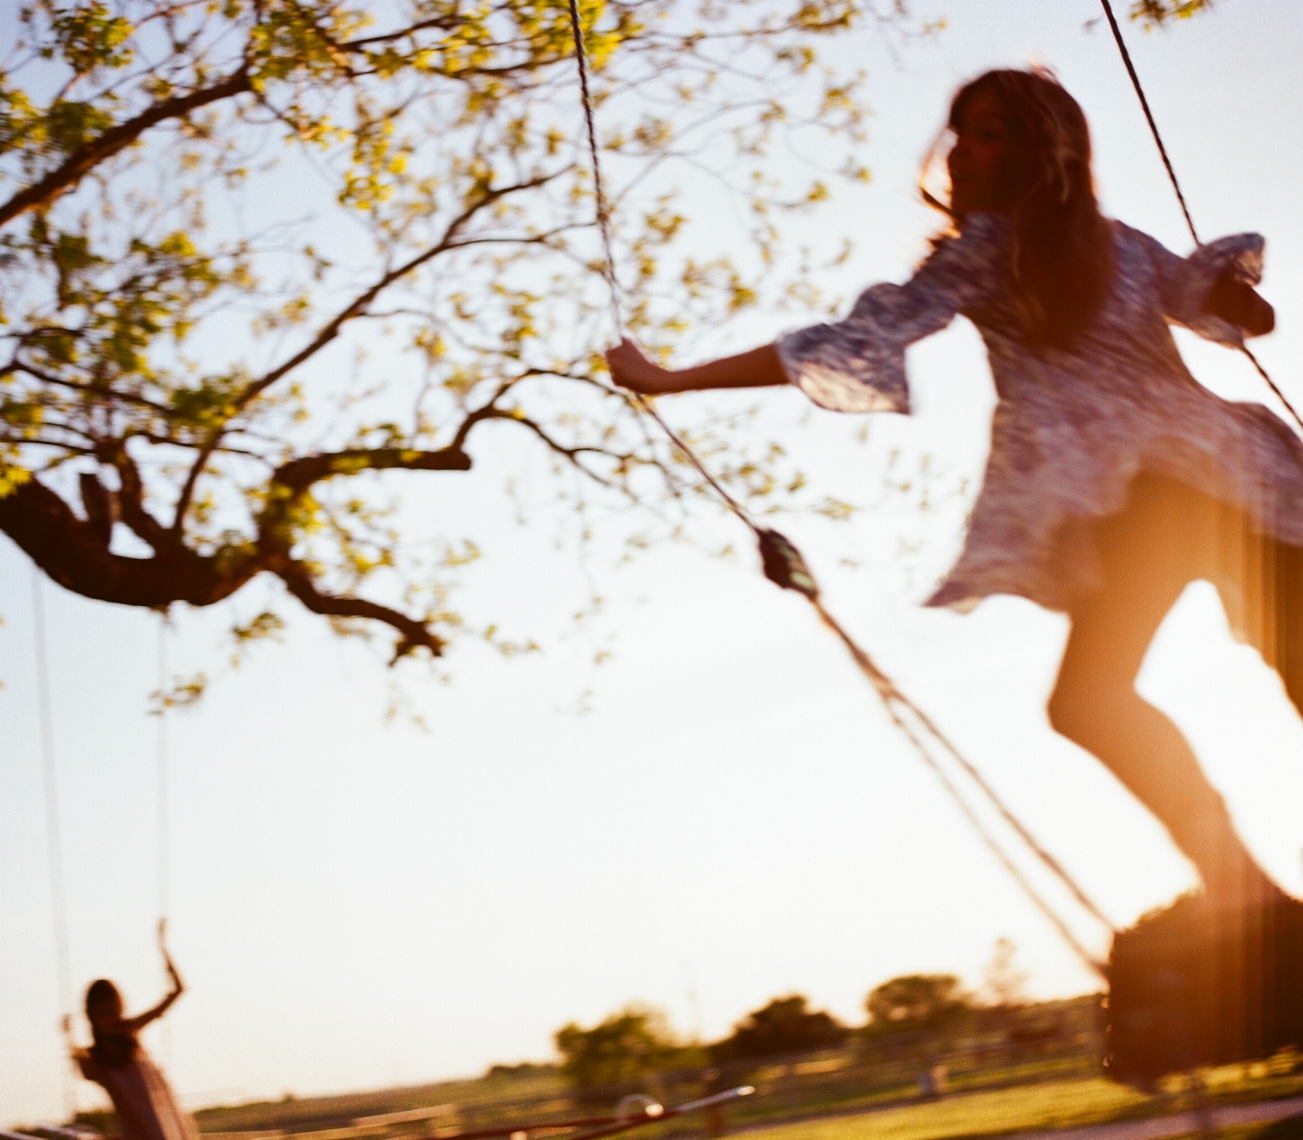 Carefree girl on tree swing | Visual Storytelling Photographer